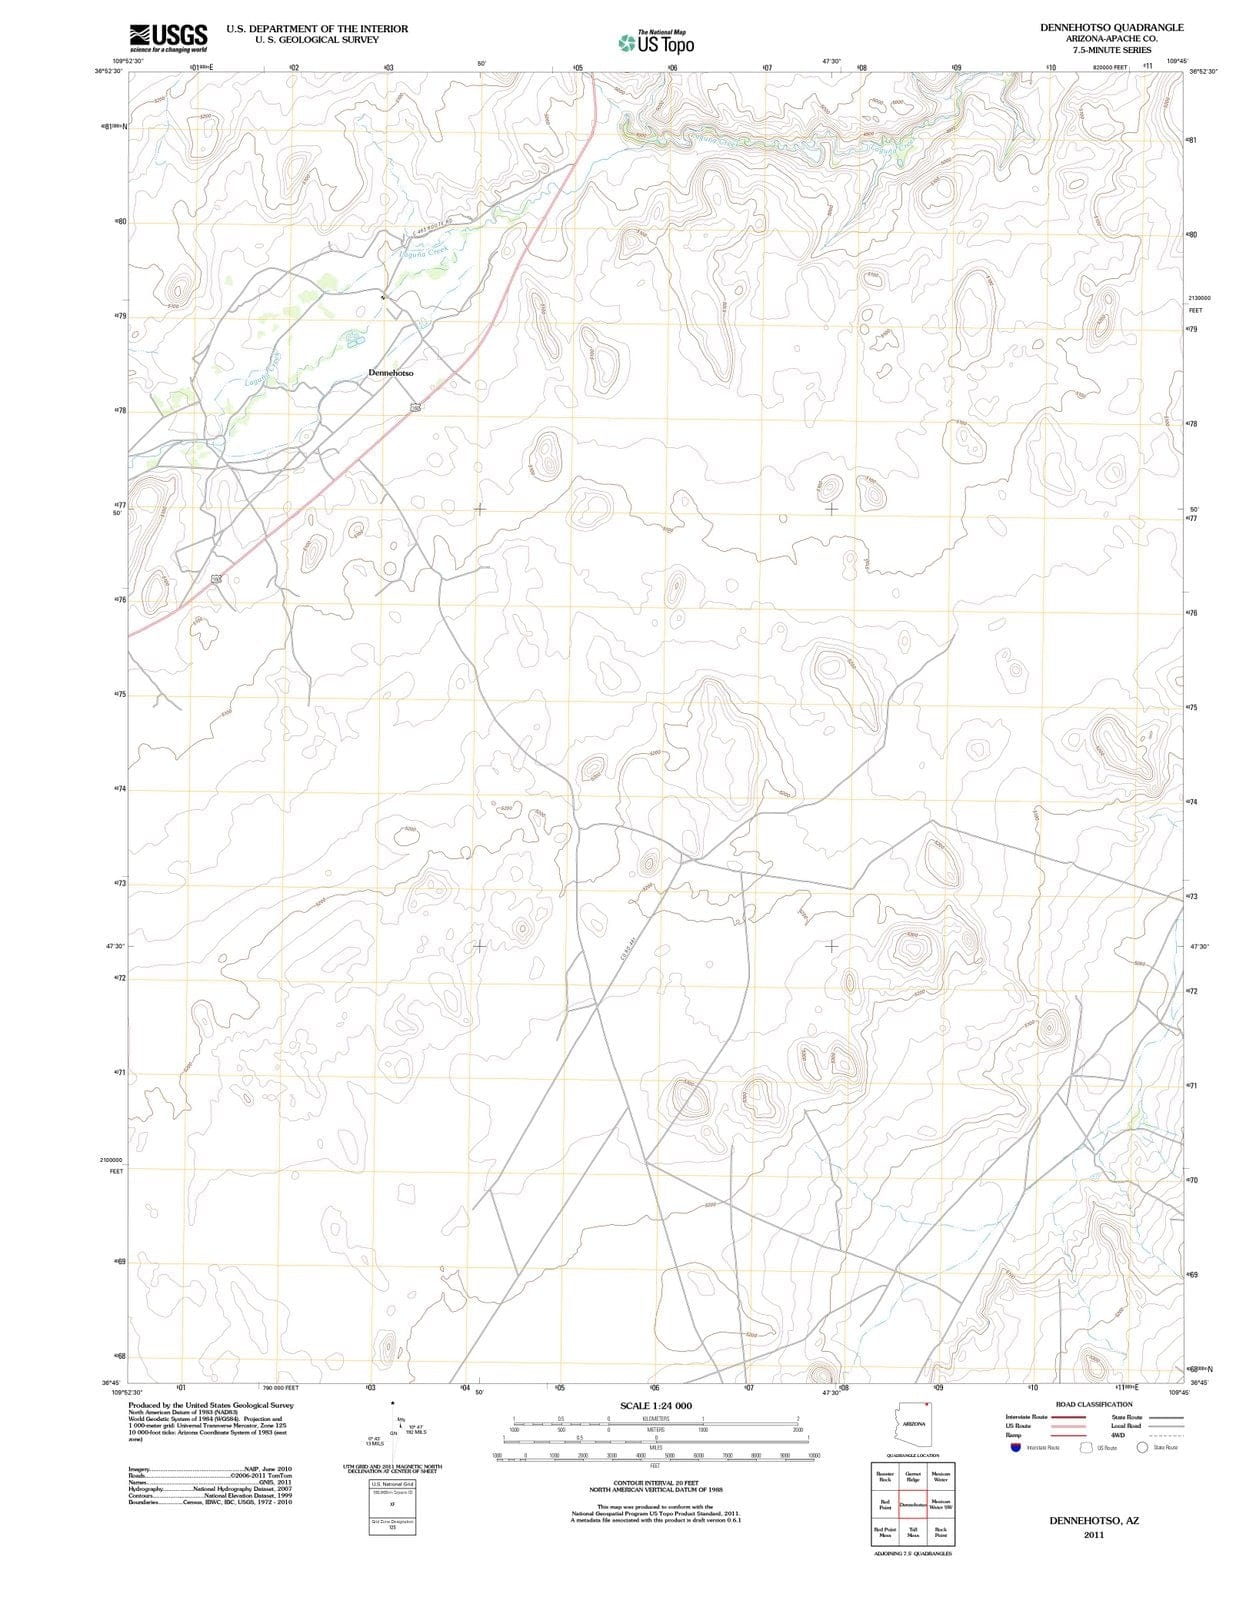 2011 Dennehotso, AZ - Arizona - USGS Topographic Map